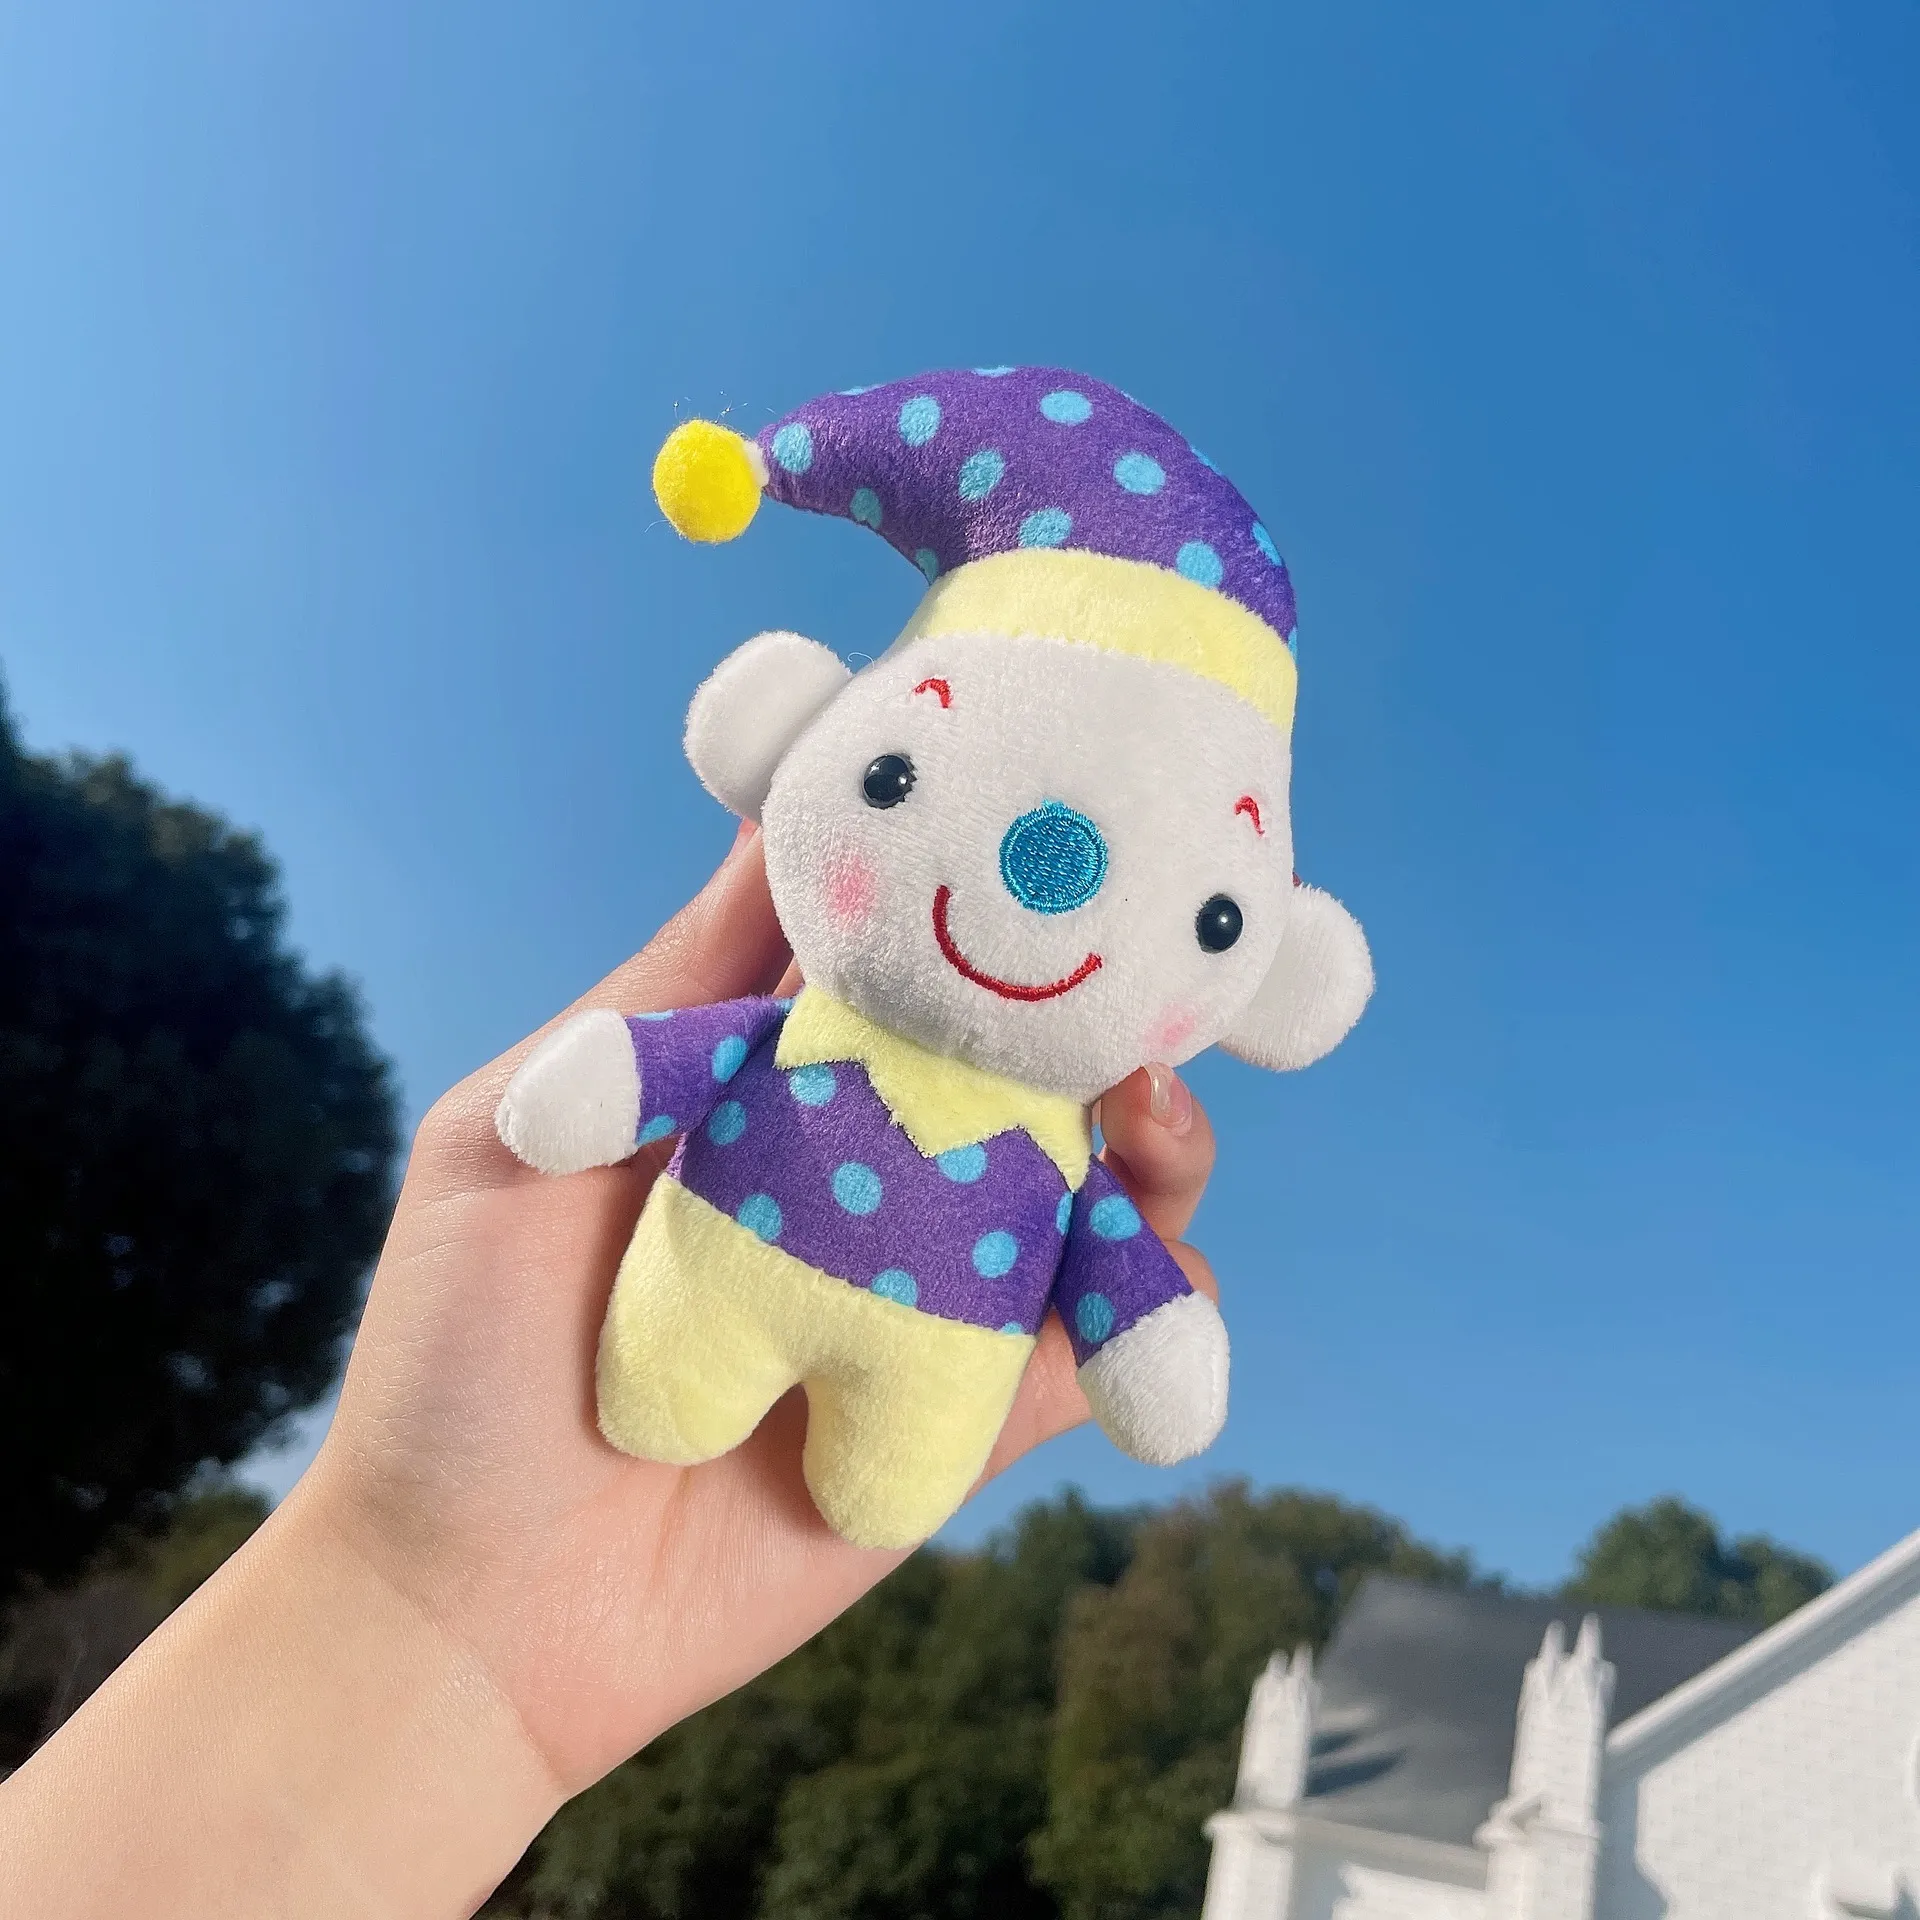 Personality Clown creative cartoon circus cute keyring plush pendant school bag grab machine doll doll